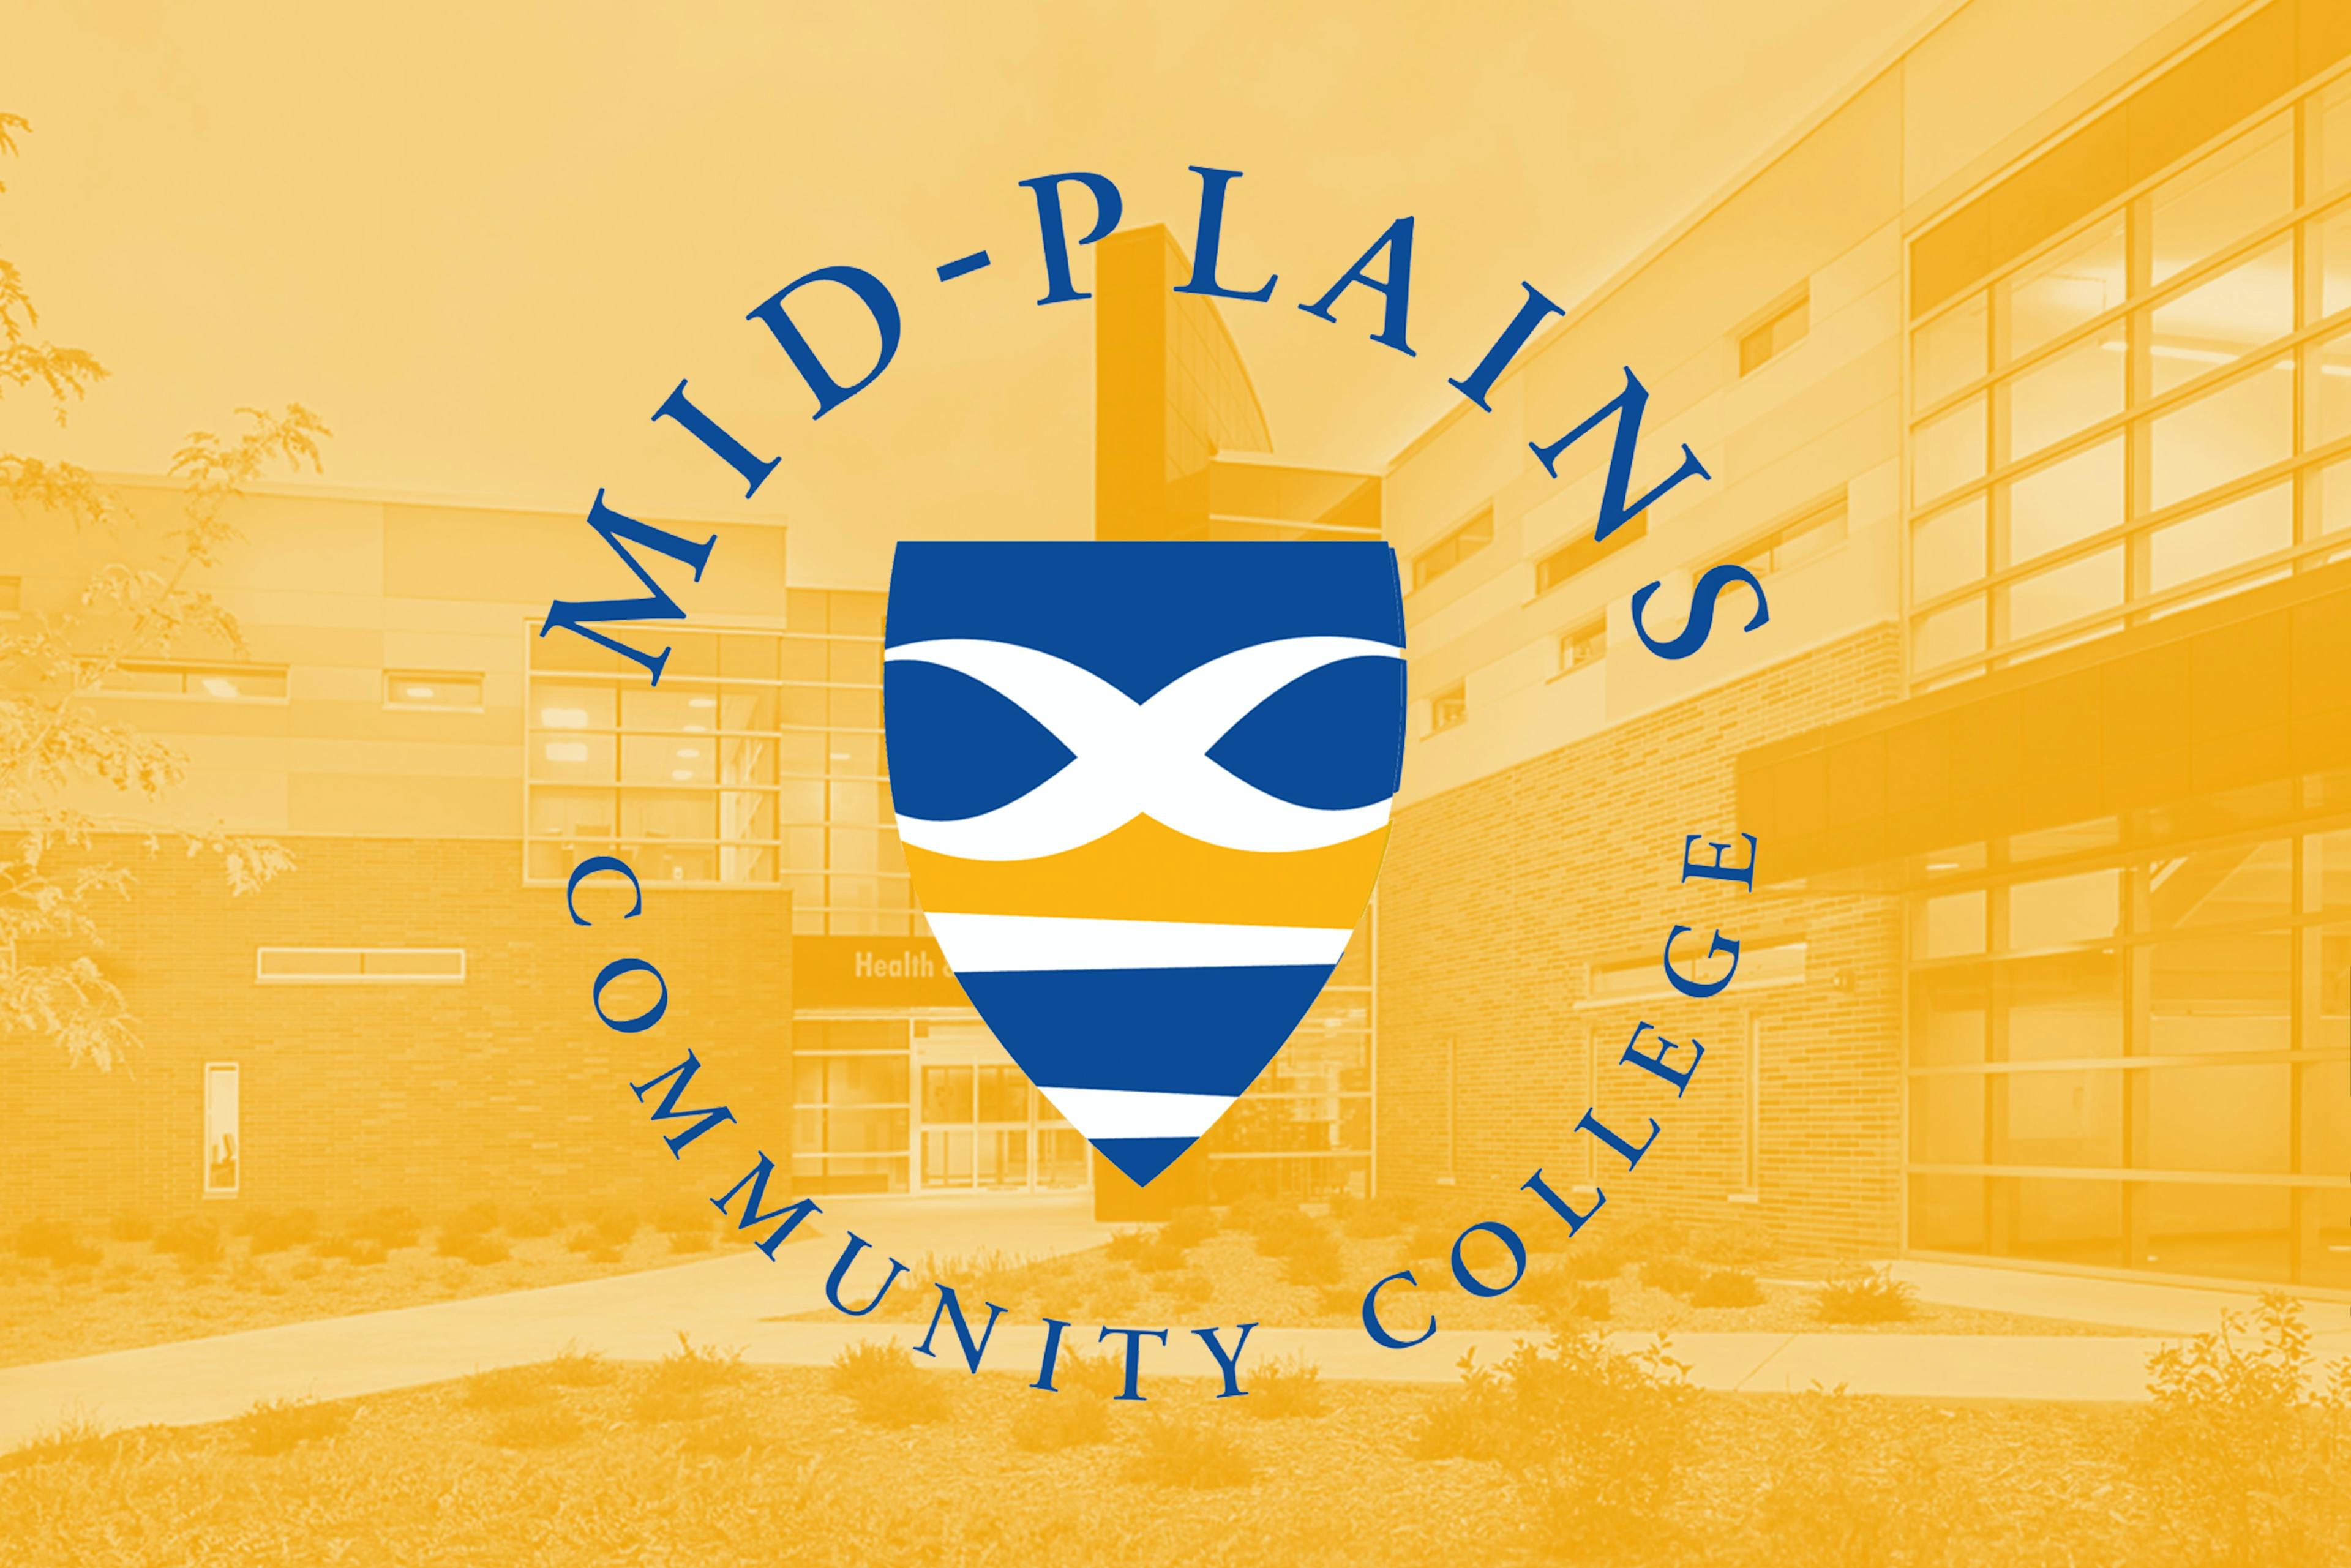 Mid-Plains Community College